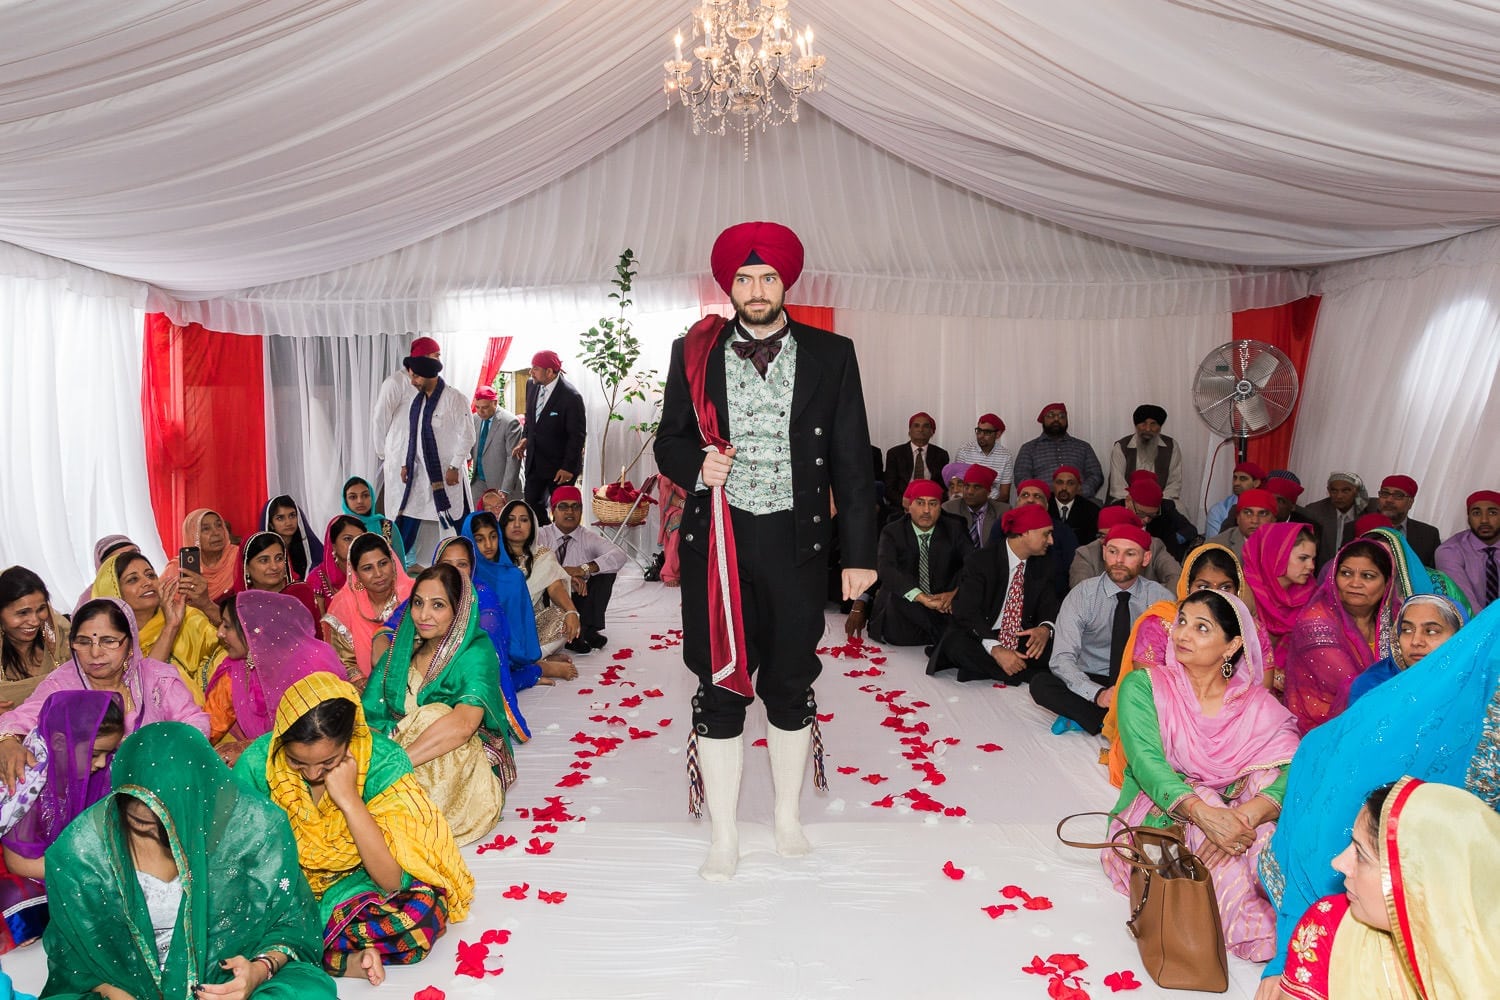 Grooms entrance, Indian and Norwegian wedding | Vancouver Indian wedding photographer